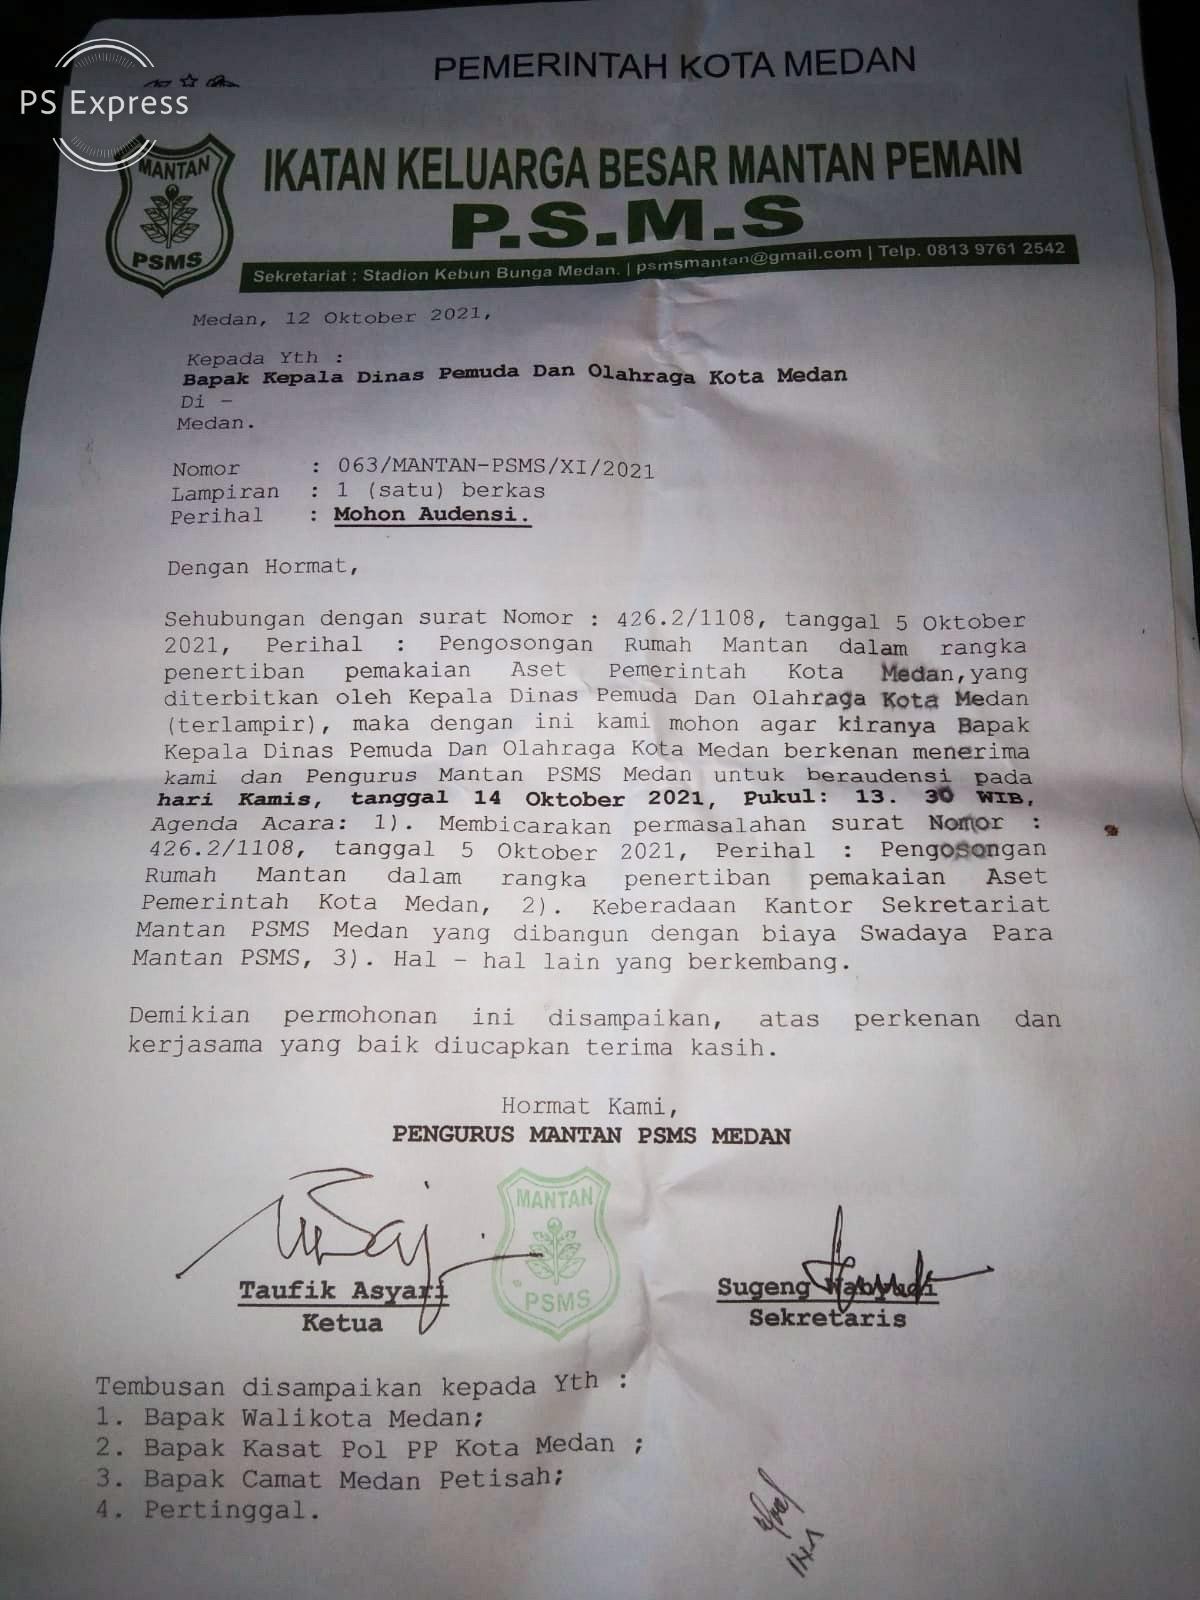 Sekretaris Mantan PSMS Medan Kecam Tindakan Anarkis Diduga Dilakukan Suruhan Kadispora